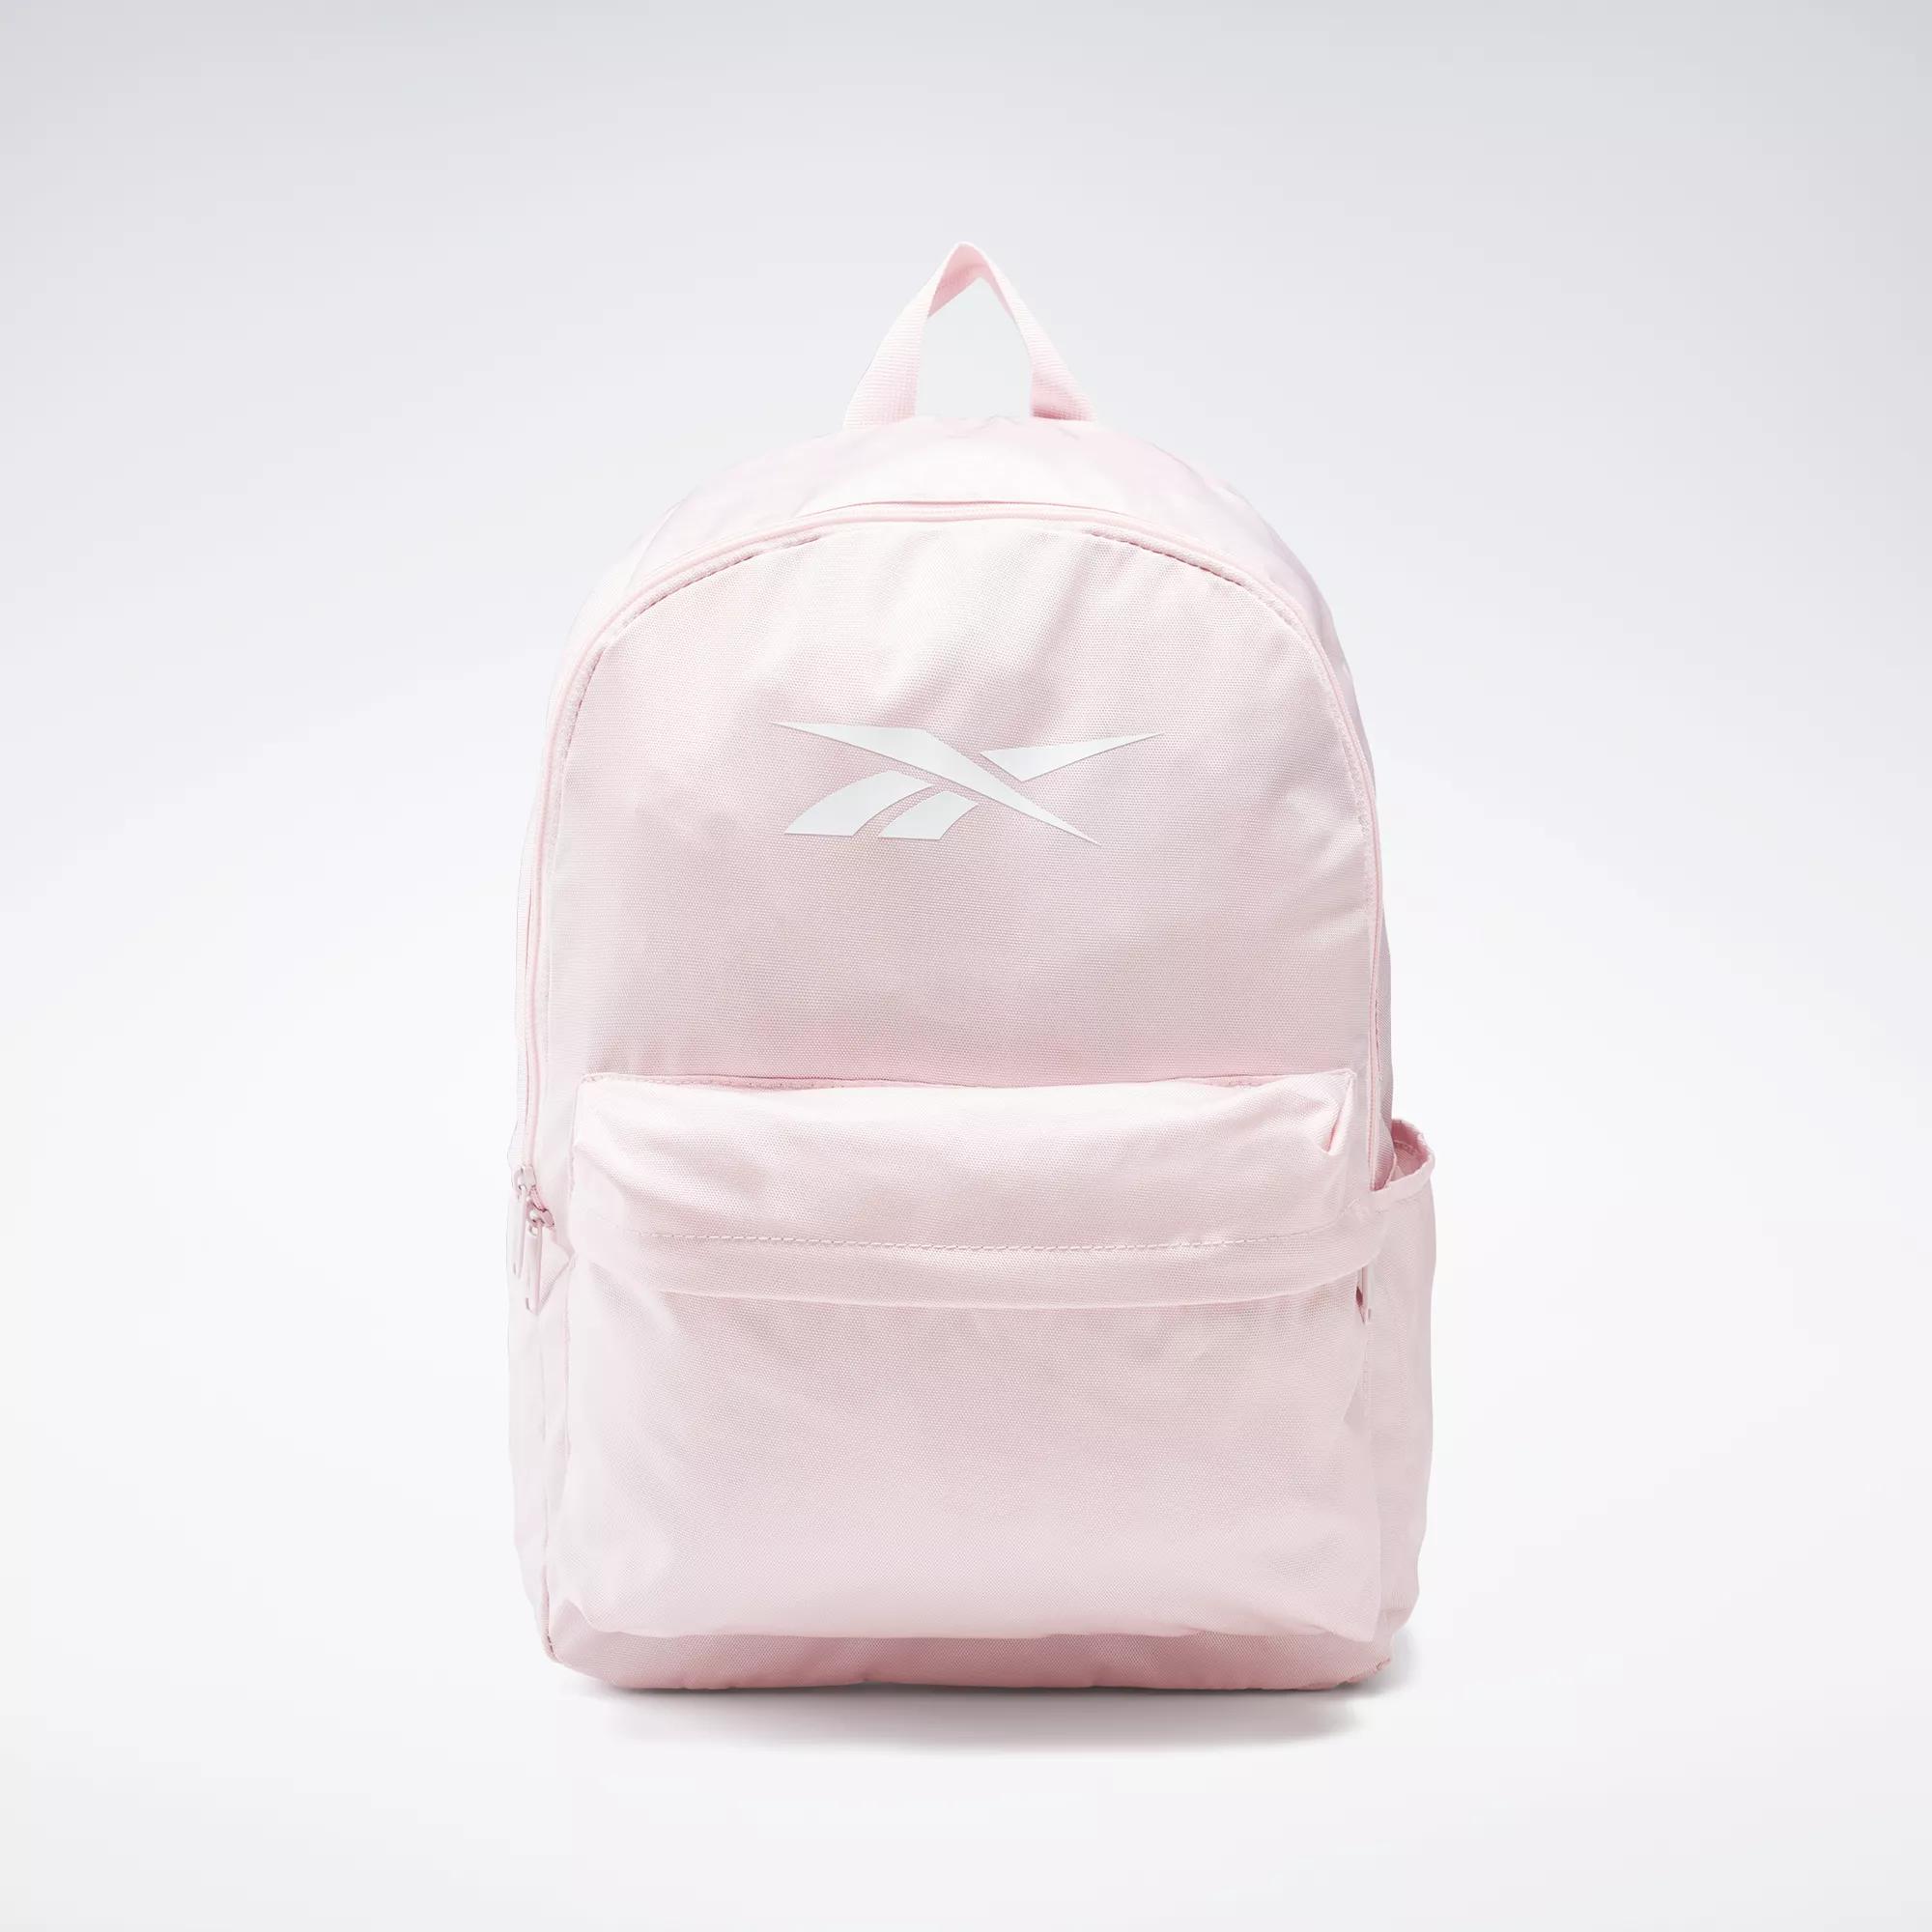 MYT Backpack | eBay